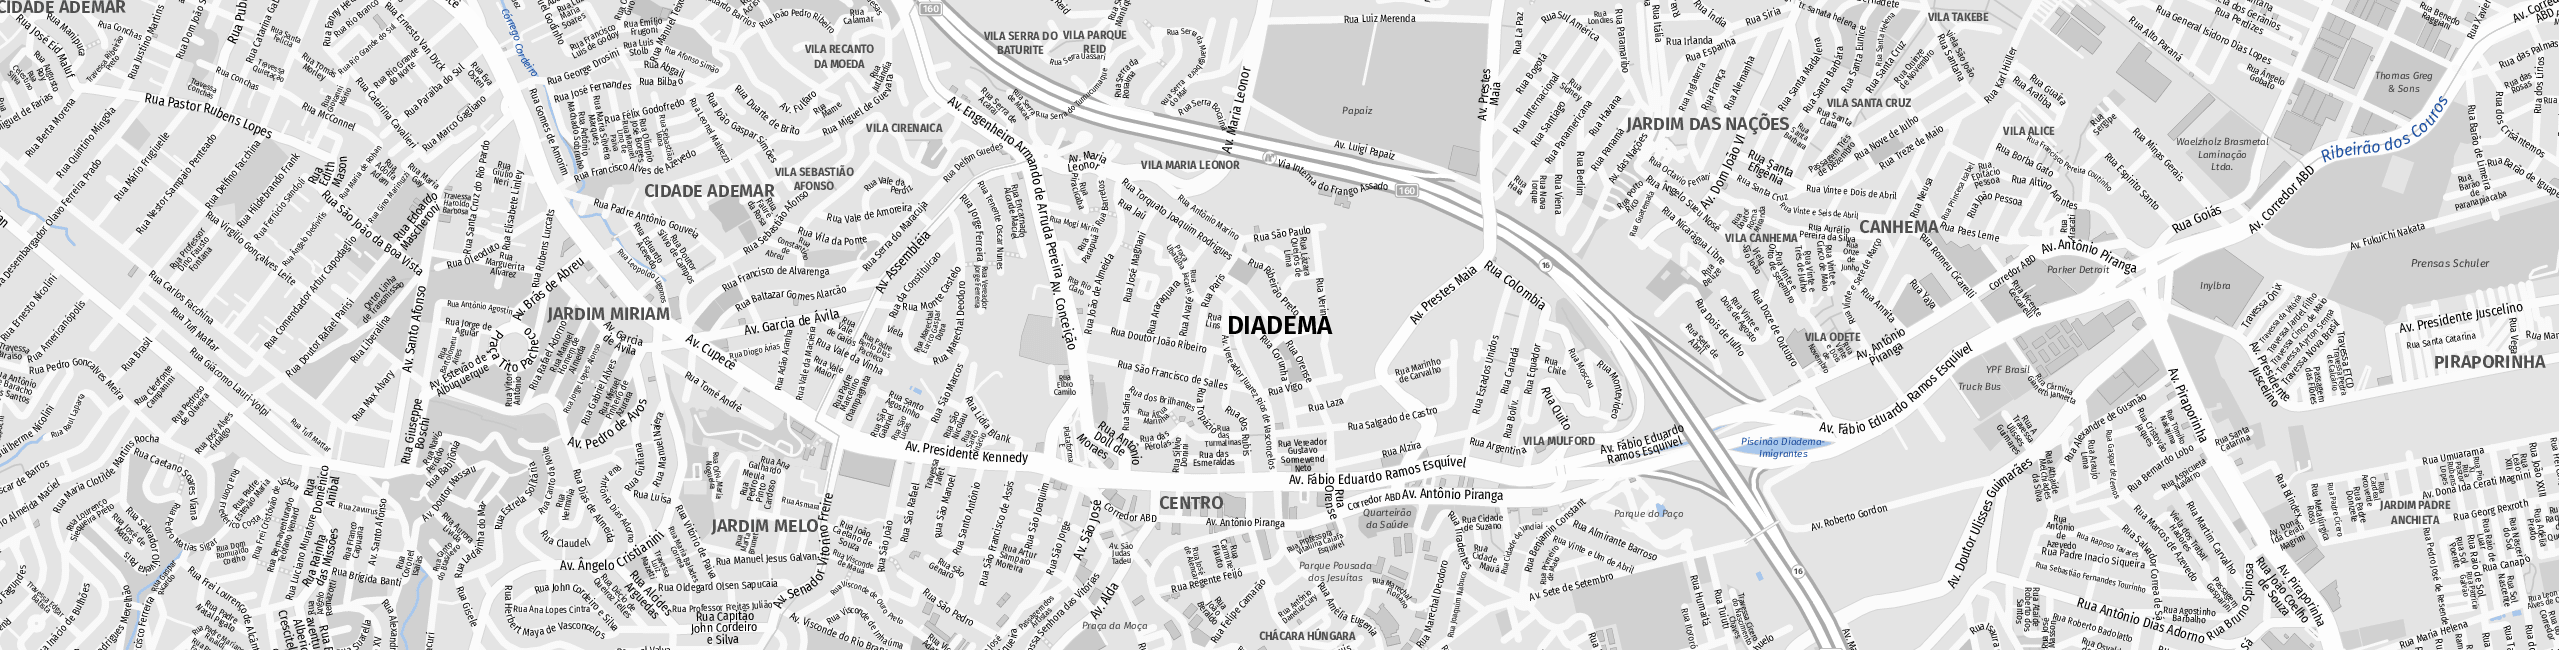 Stadtplan Diadema zum Downloaden.